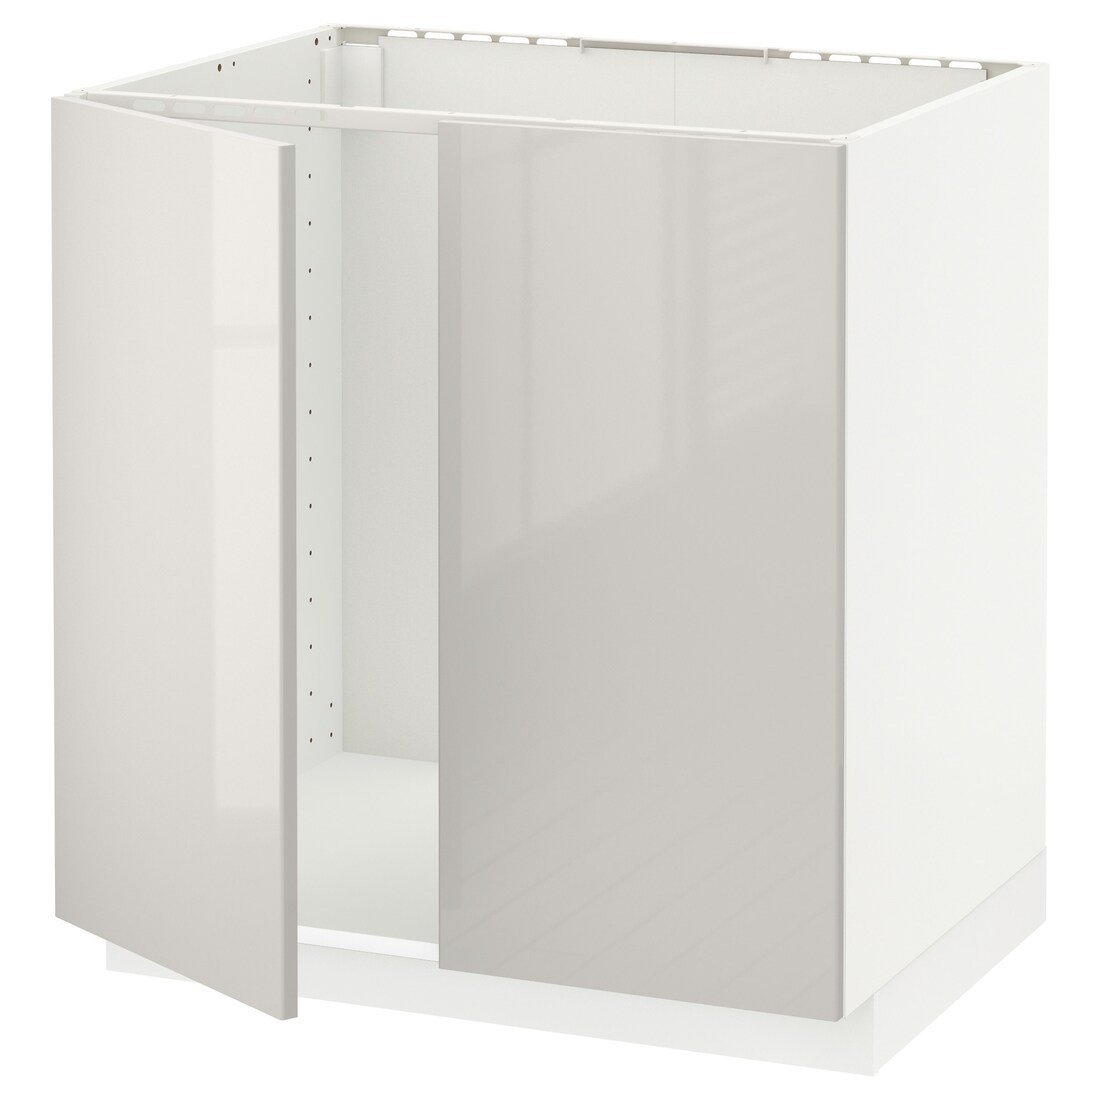 METOD МЕТОД Напольный шкаф для мойки, белый / Ringhult светло-серый, 80x60 см